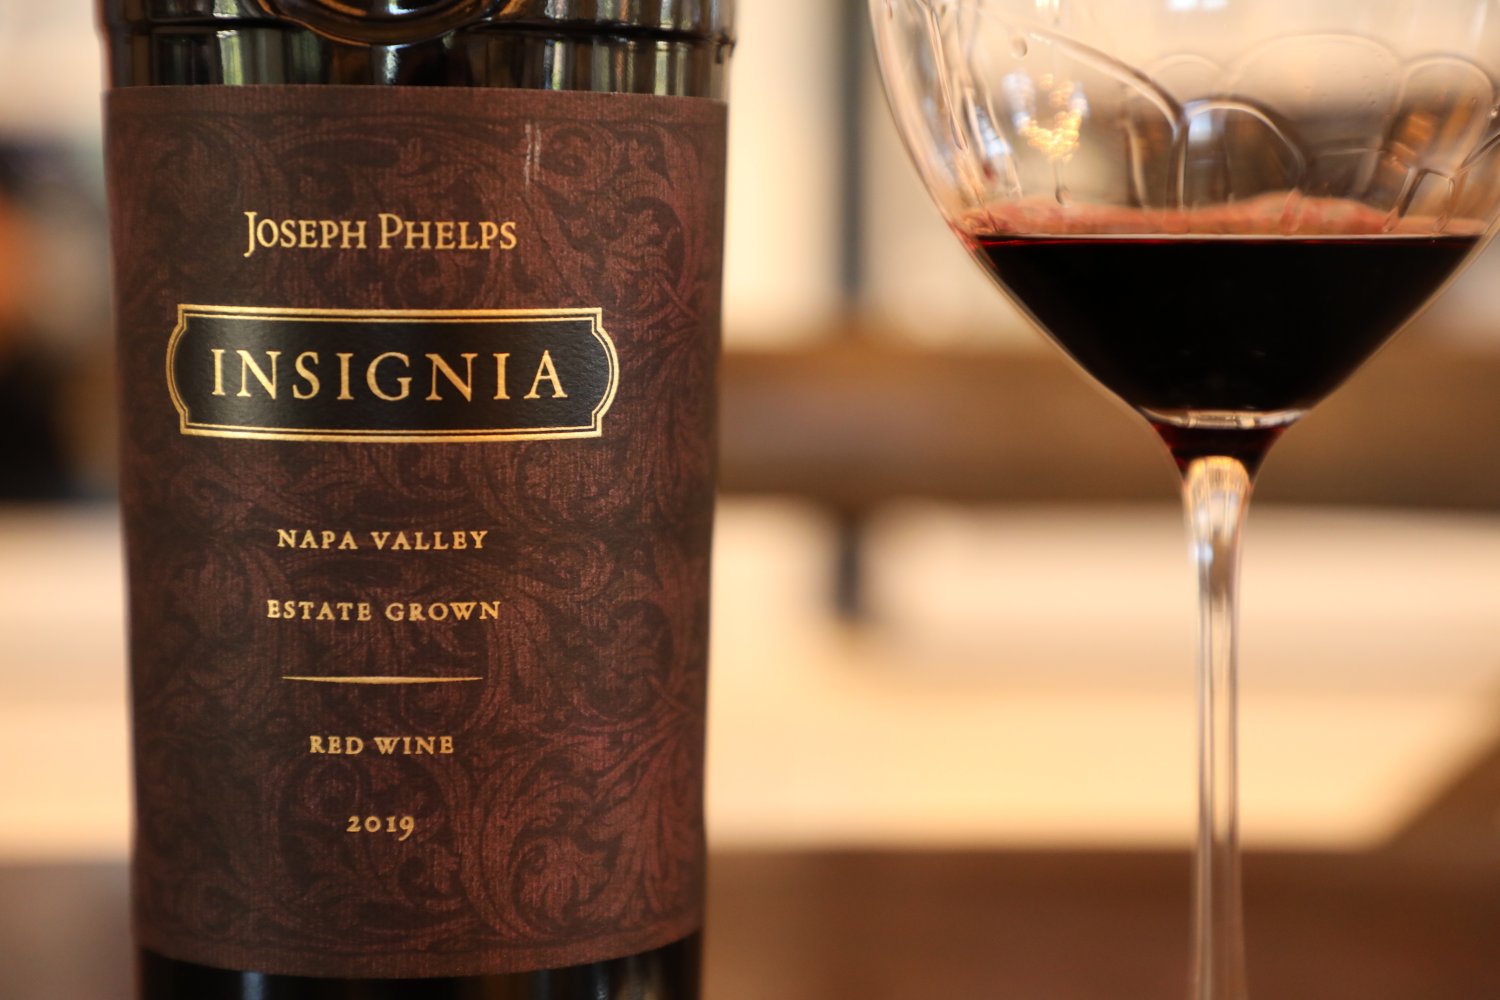 Joseph Phelps Vineyards - The Napa Wine Project